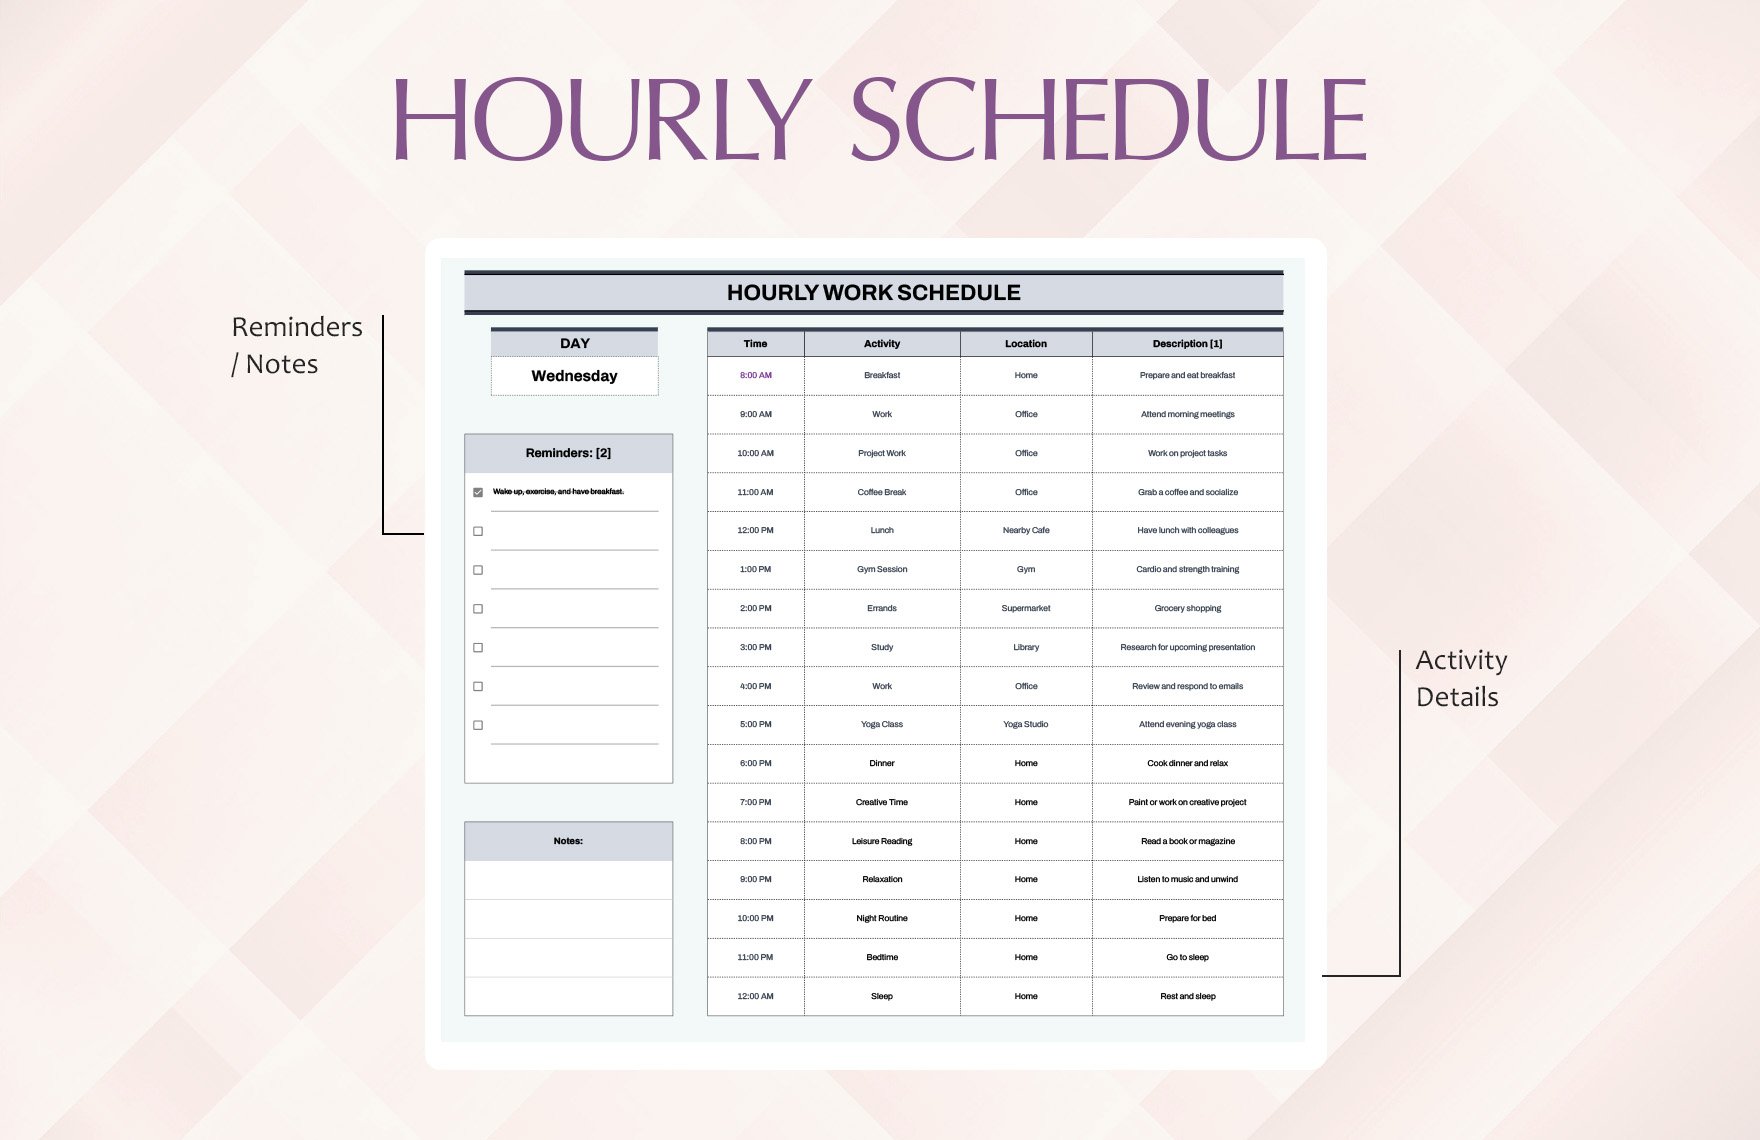 Hourly Work Schedule Template